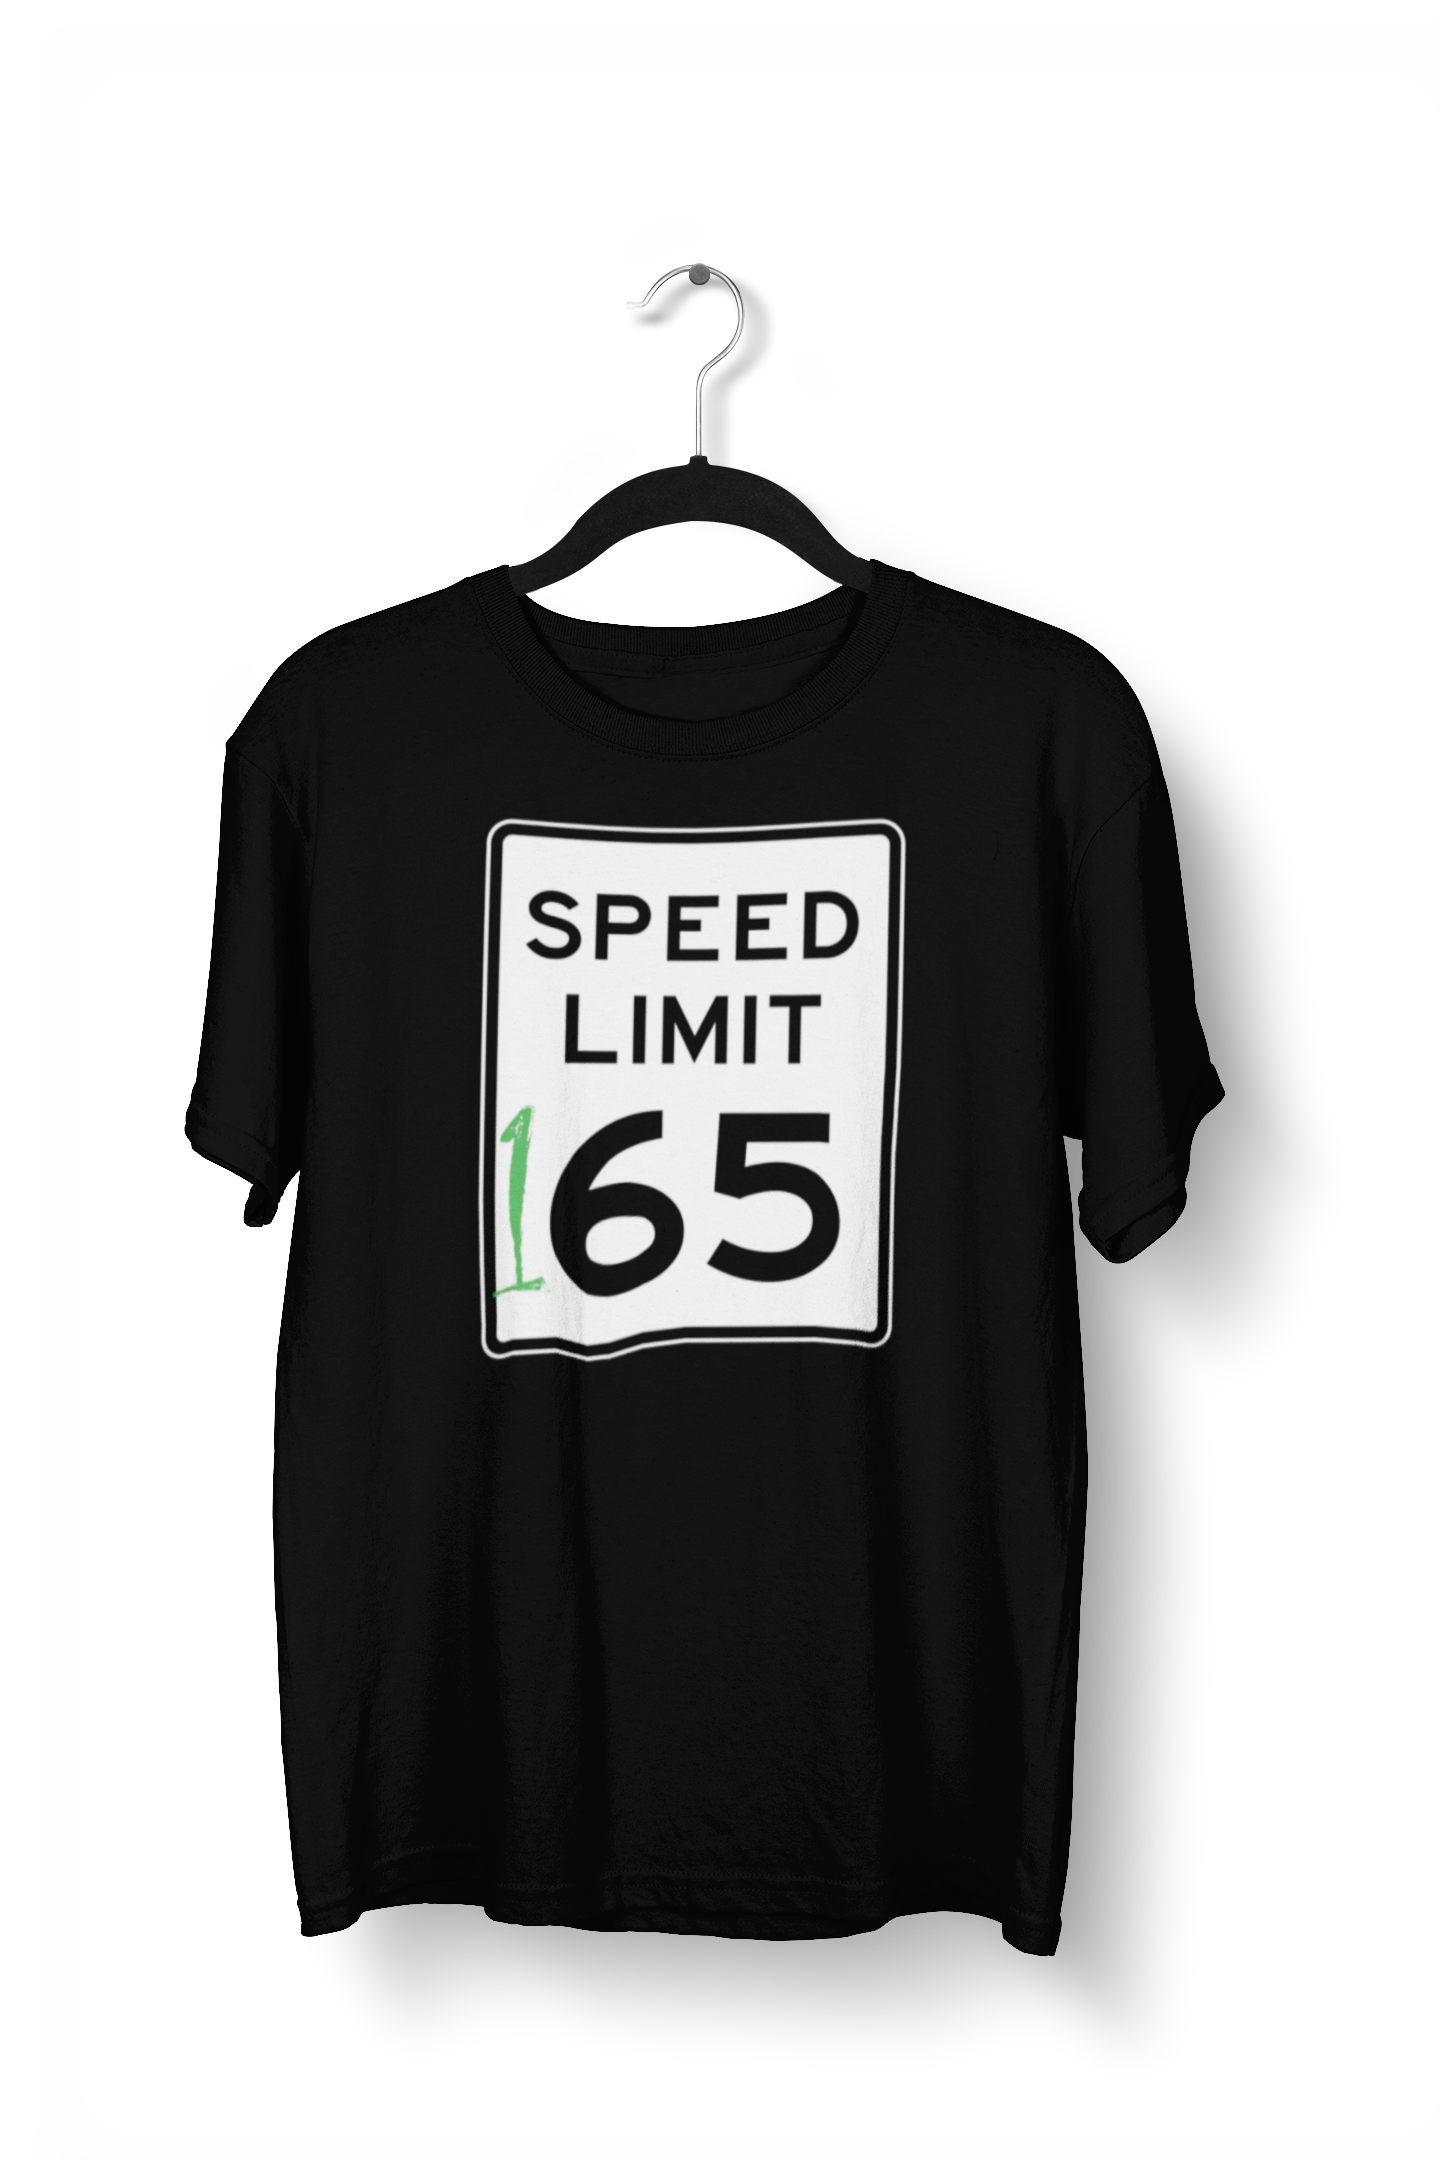 Speed Limit 165 T-Shirt